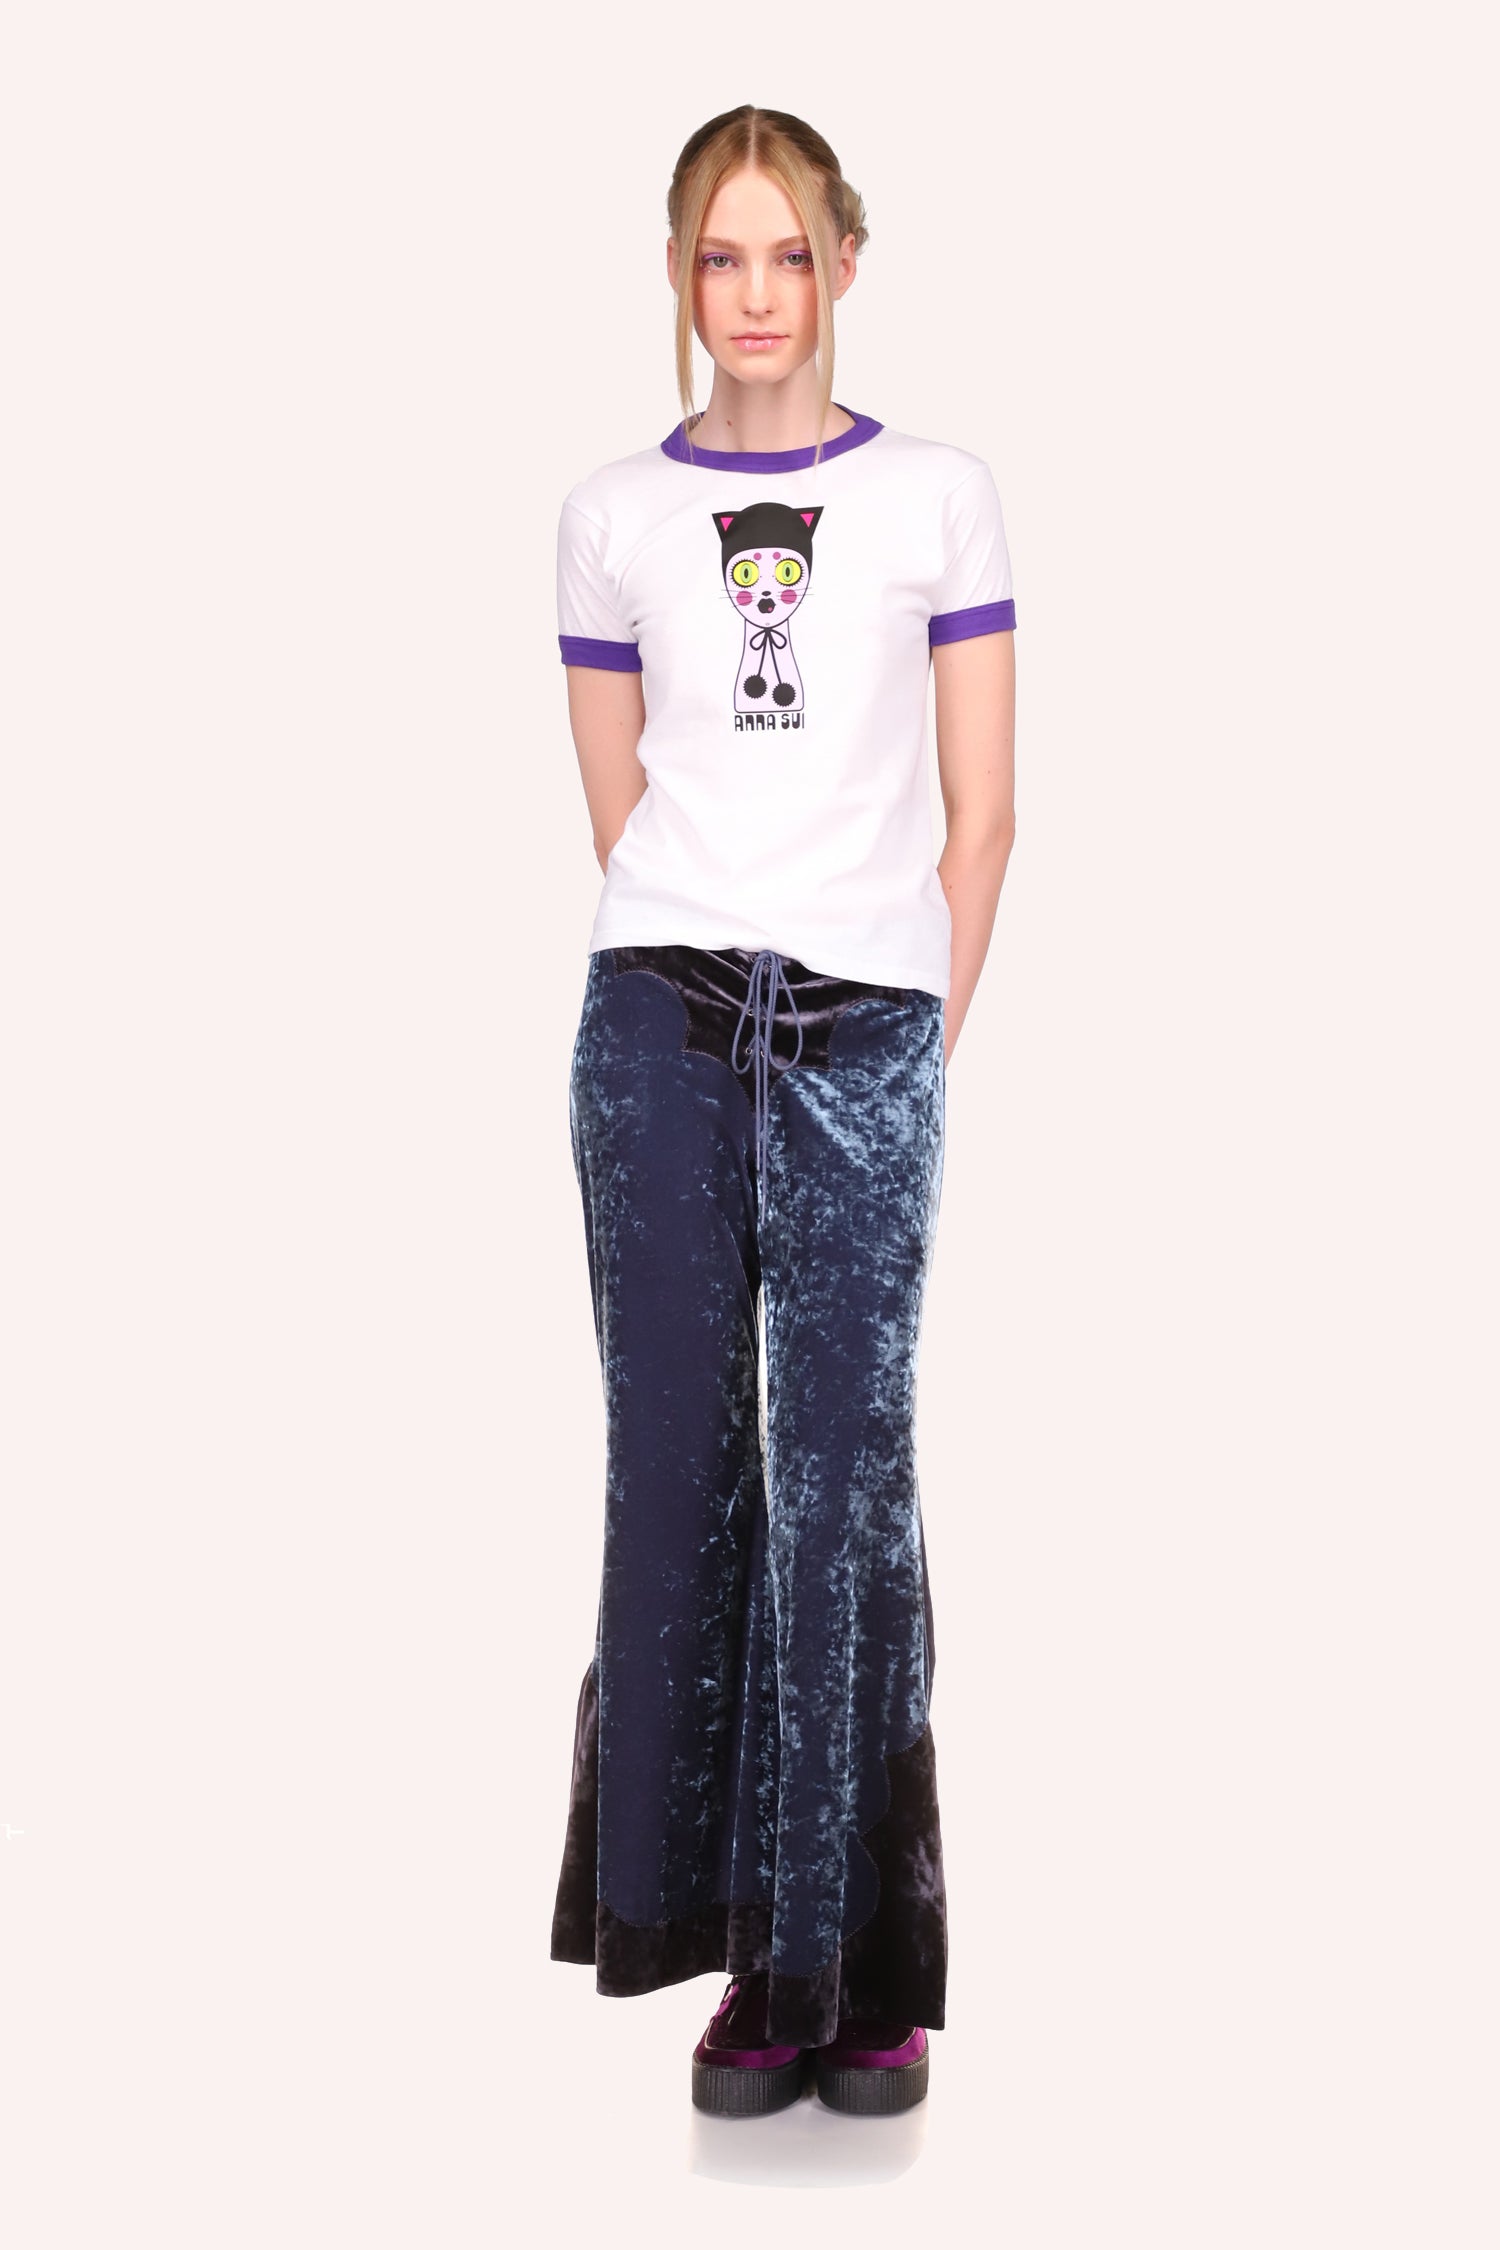  La t-shirt Cat Dolly Head Purple si abbina perfettamente ai pantaloni a gamba larga.